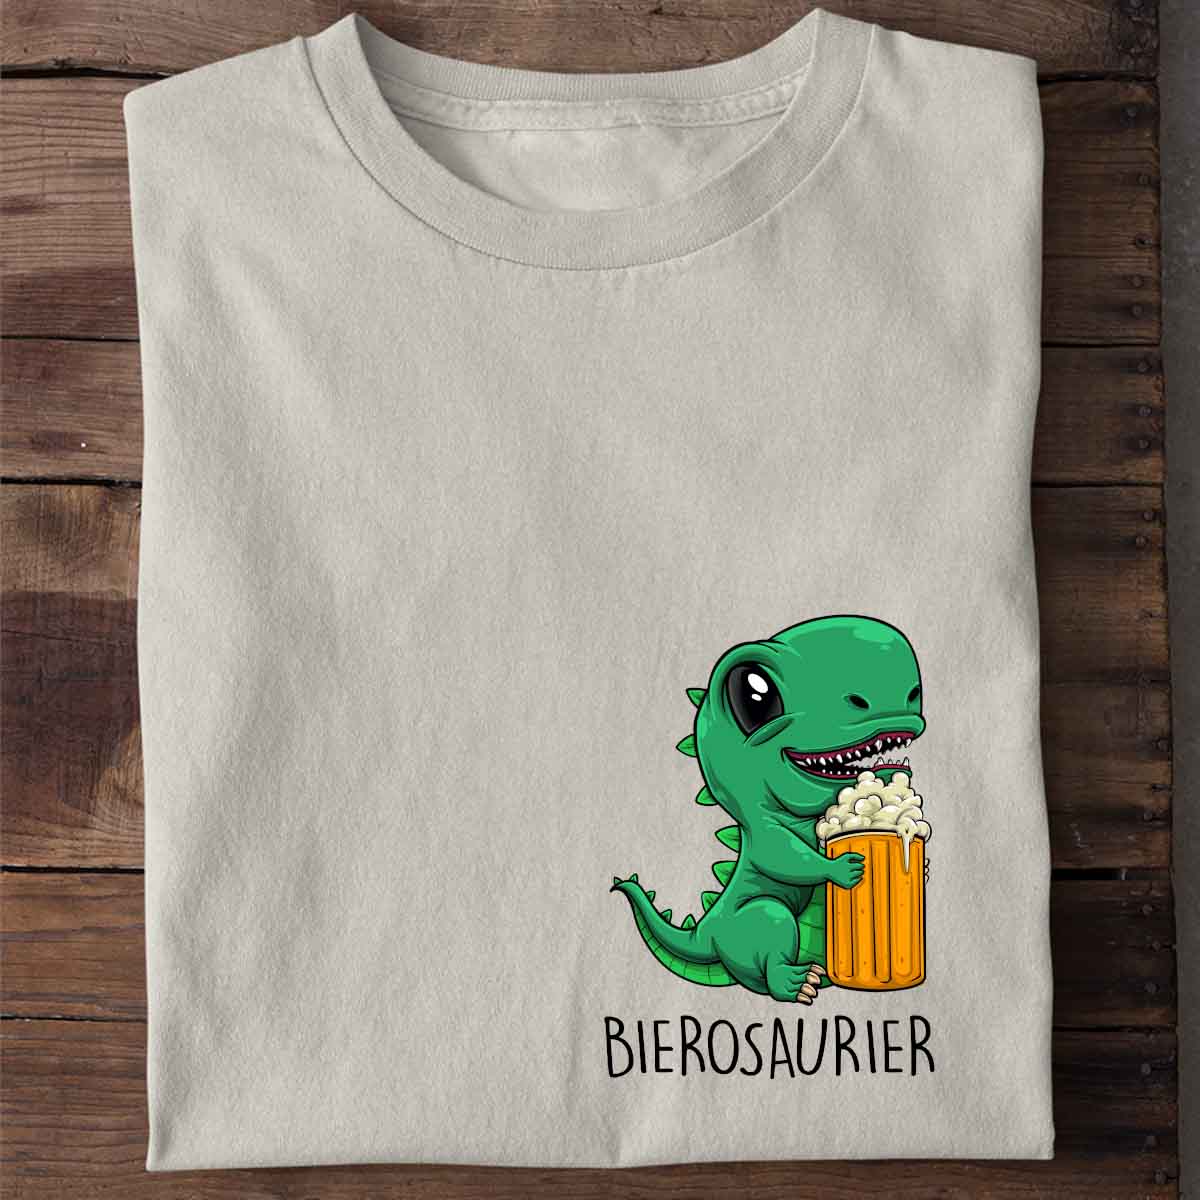 Bierosaurier - Shirt Unisex Brust